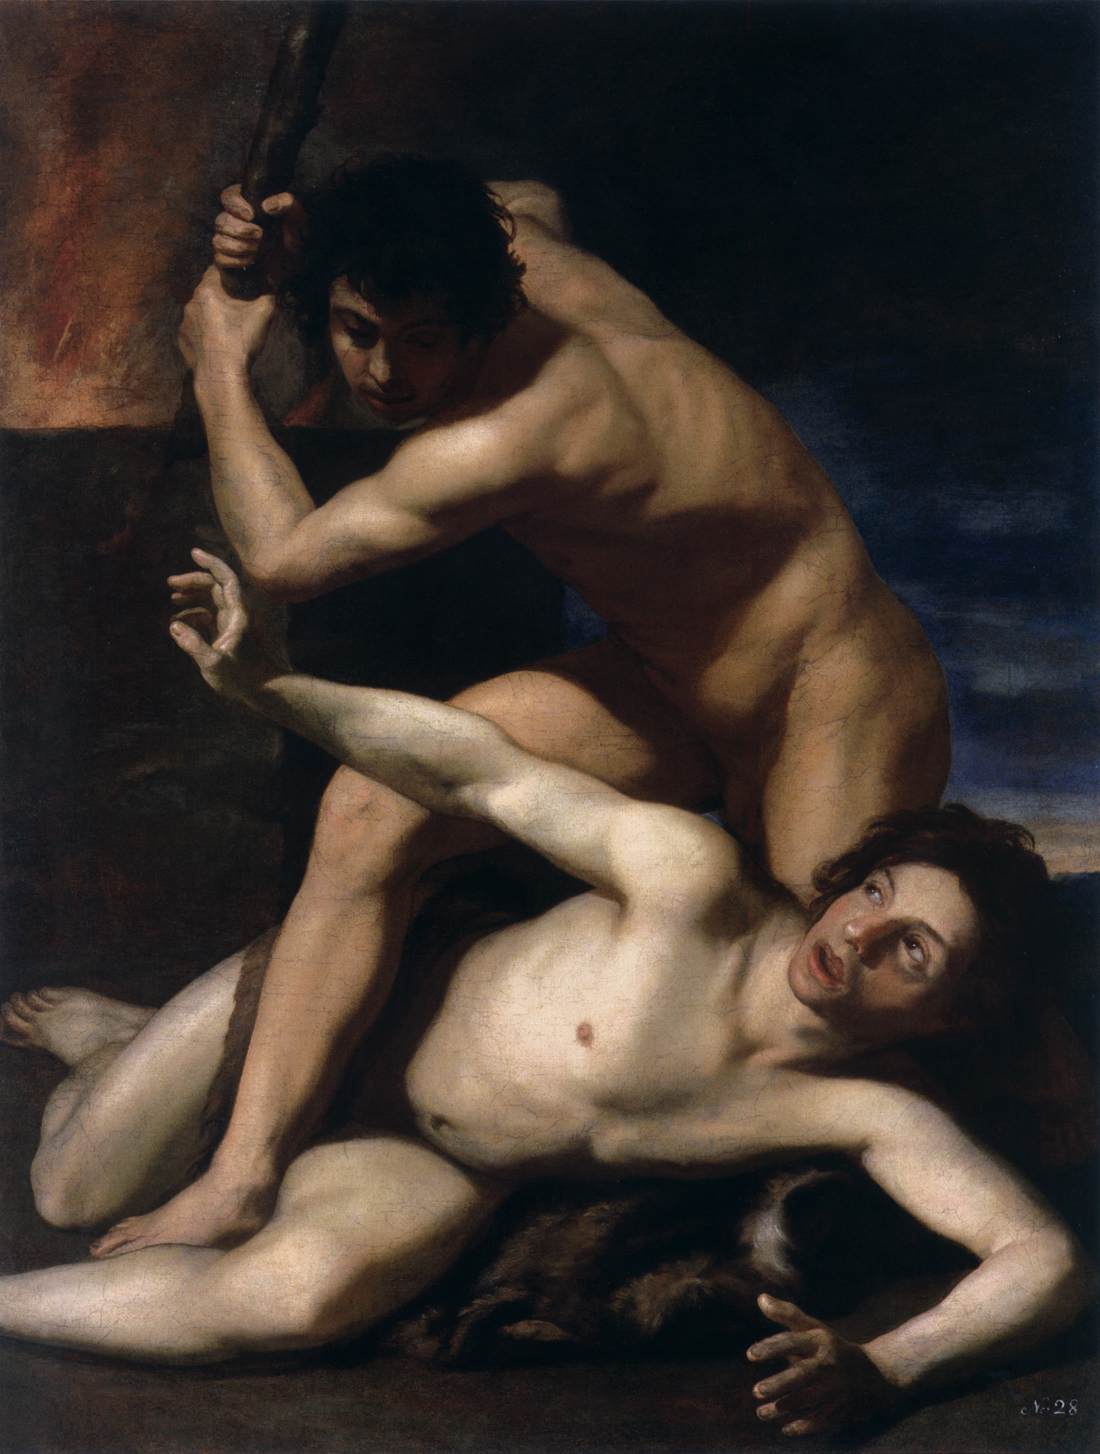 Kain dræber Abel